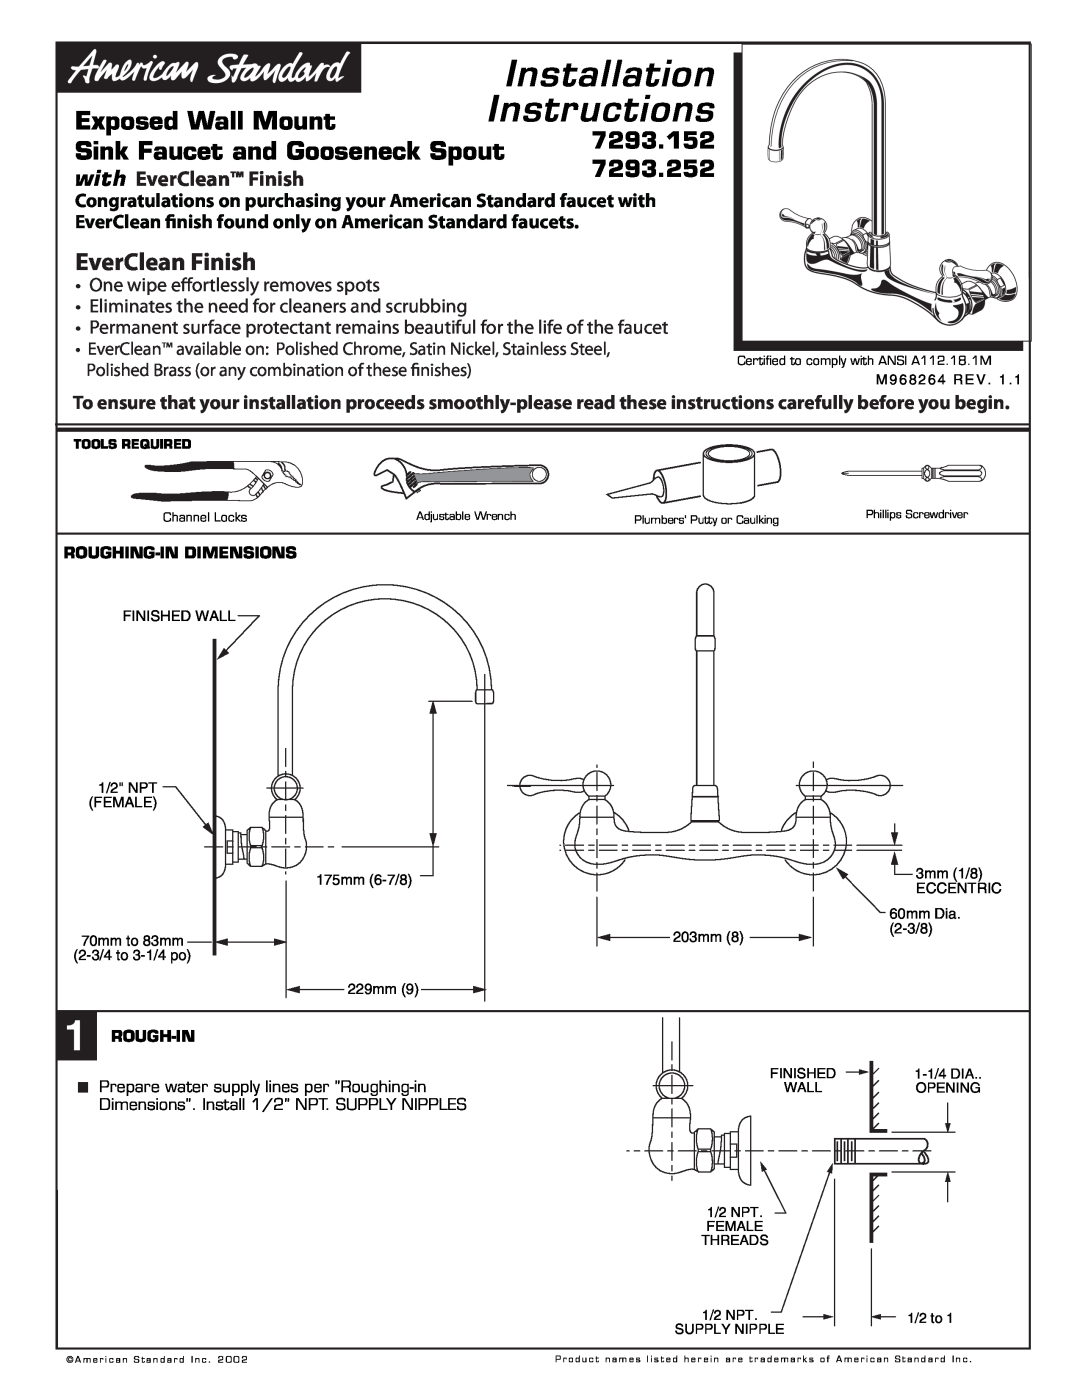 American Standard 7293.252 installation instructions Roughing-Indimensions, Rough-In, Installation, Instructions 